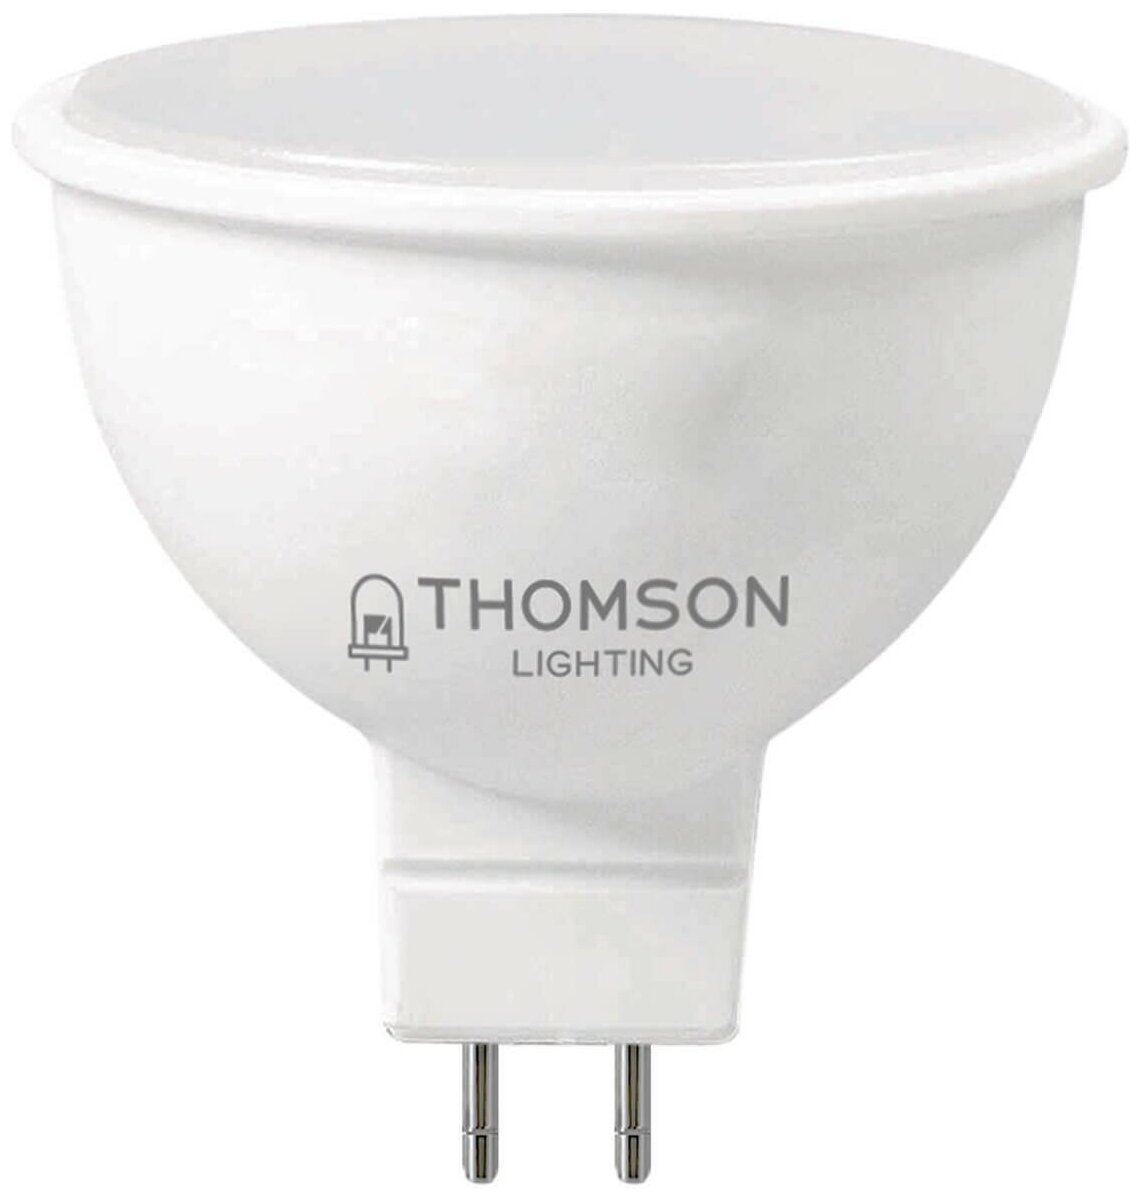 Лампочка Thomson TH-B2050 10 Вт, GU 5.3, 4000K, MR16, полусфера, нейтральный белый свет